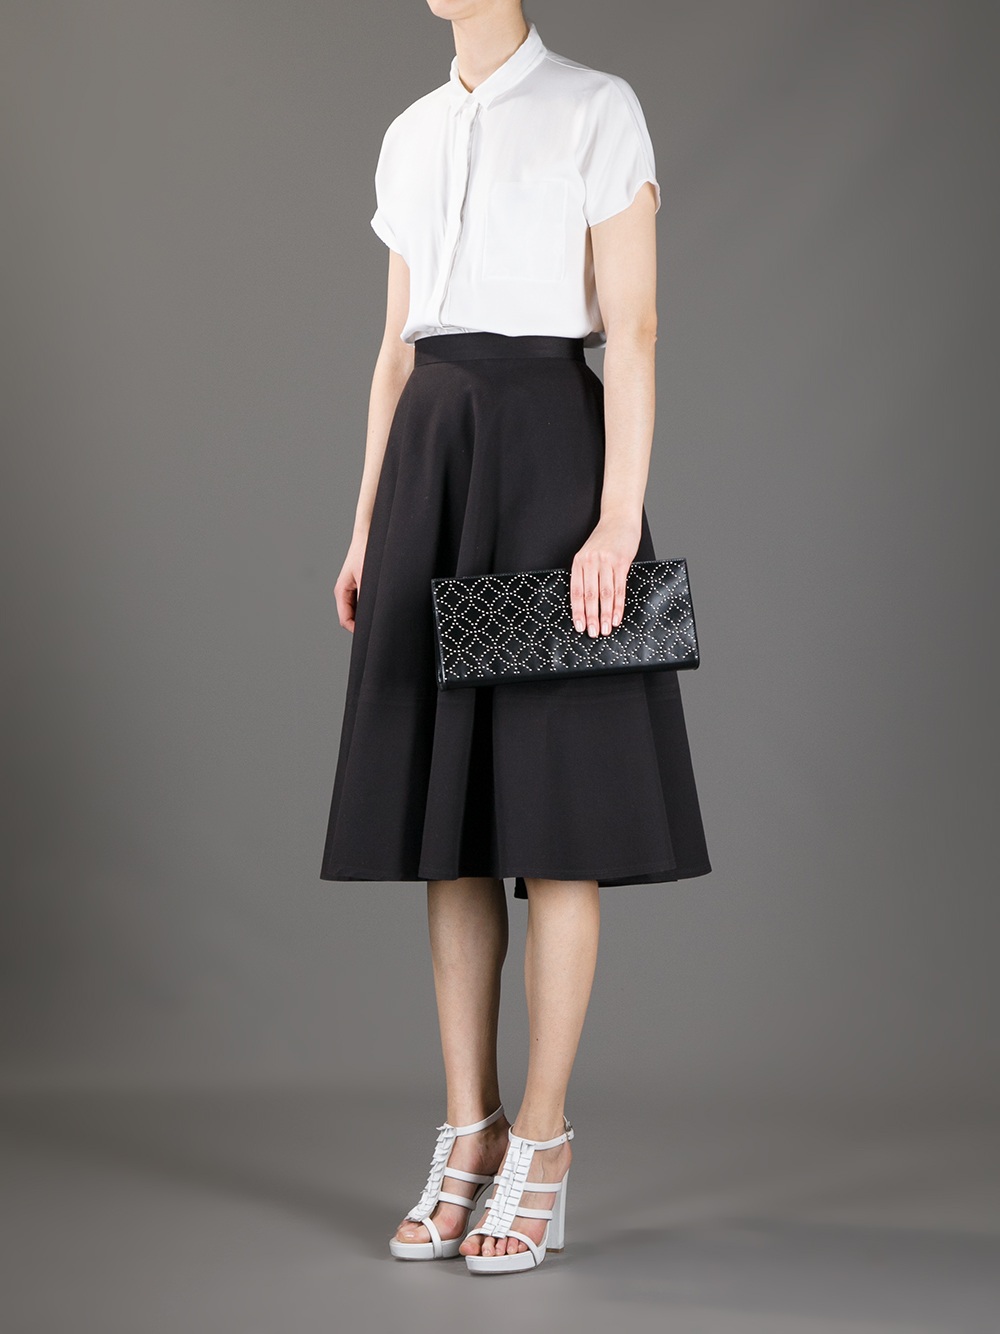 Alaïa Studded Clutch Bag in Black - Lyst